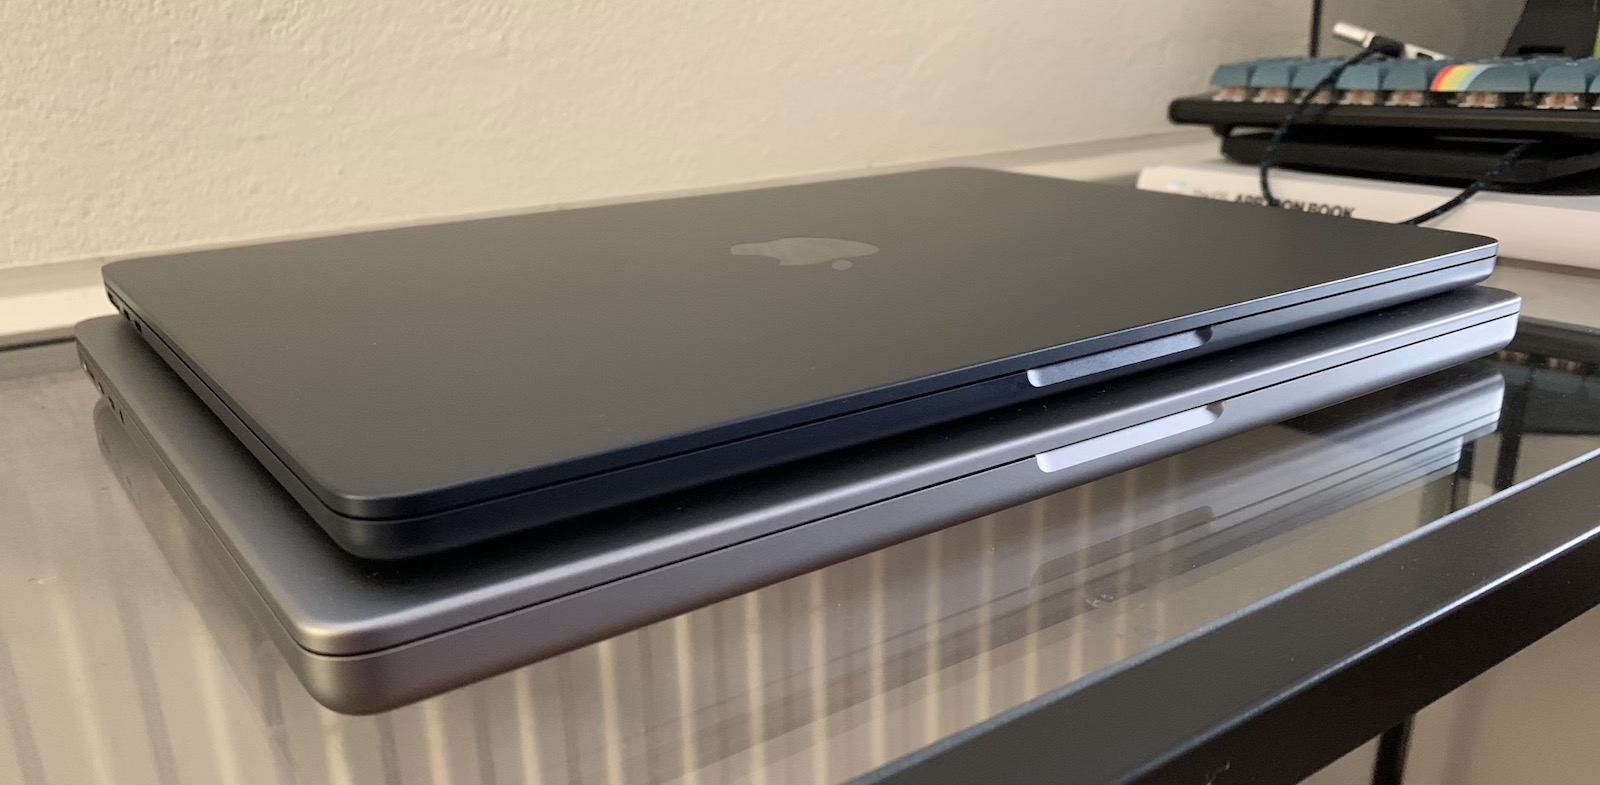 2022 Macbook air on top of 2021 Macbook pro 14-inch